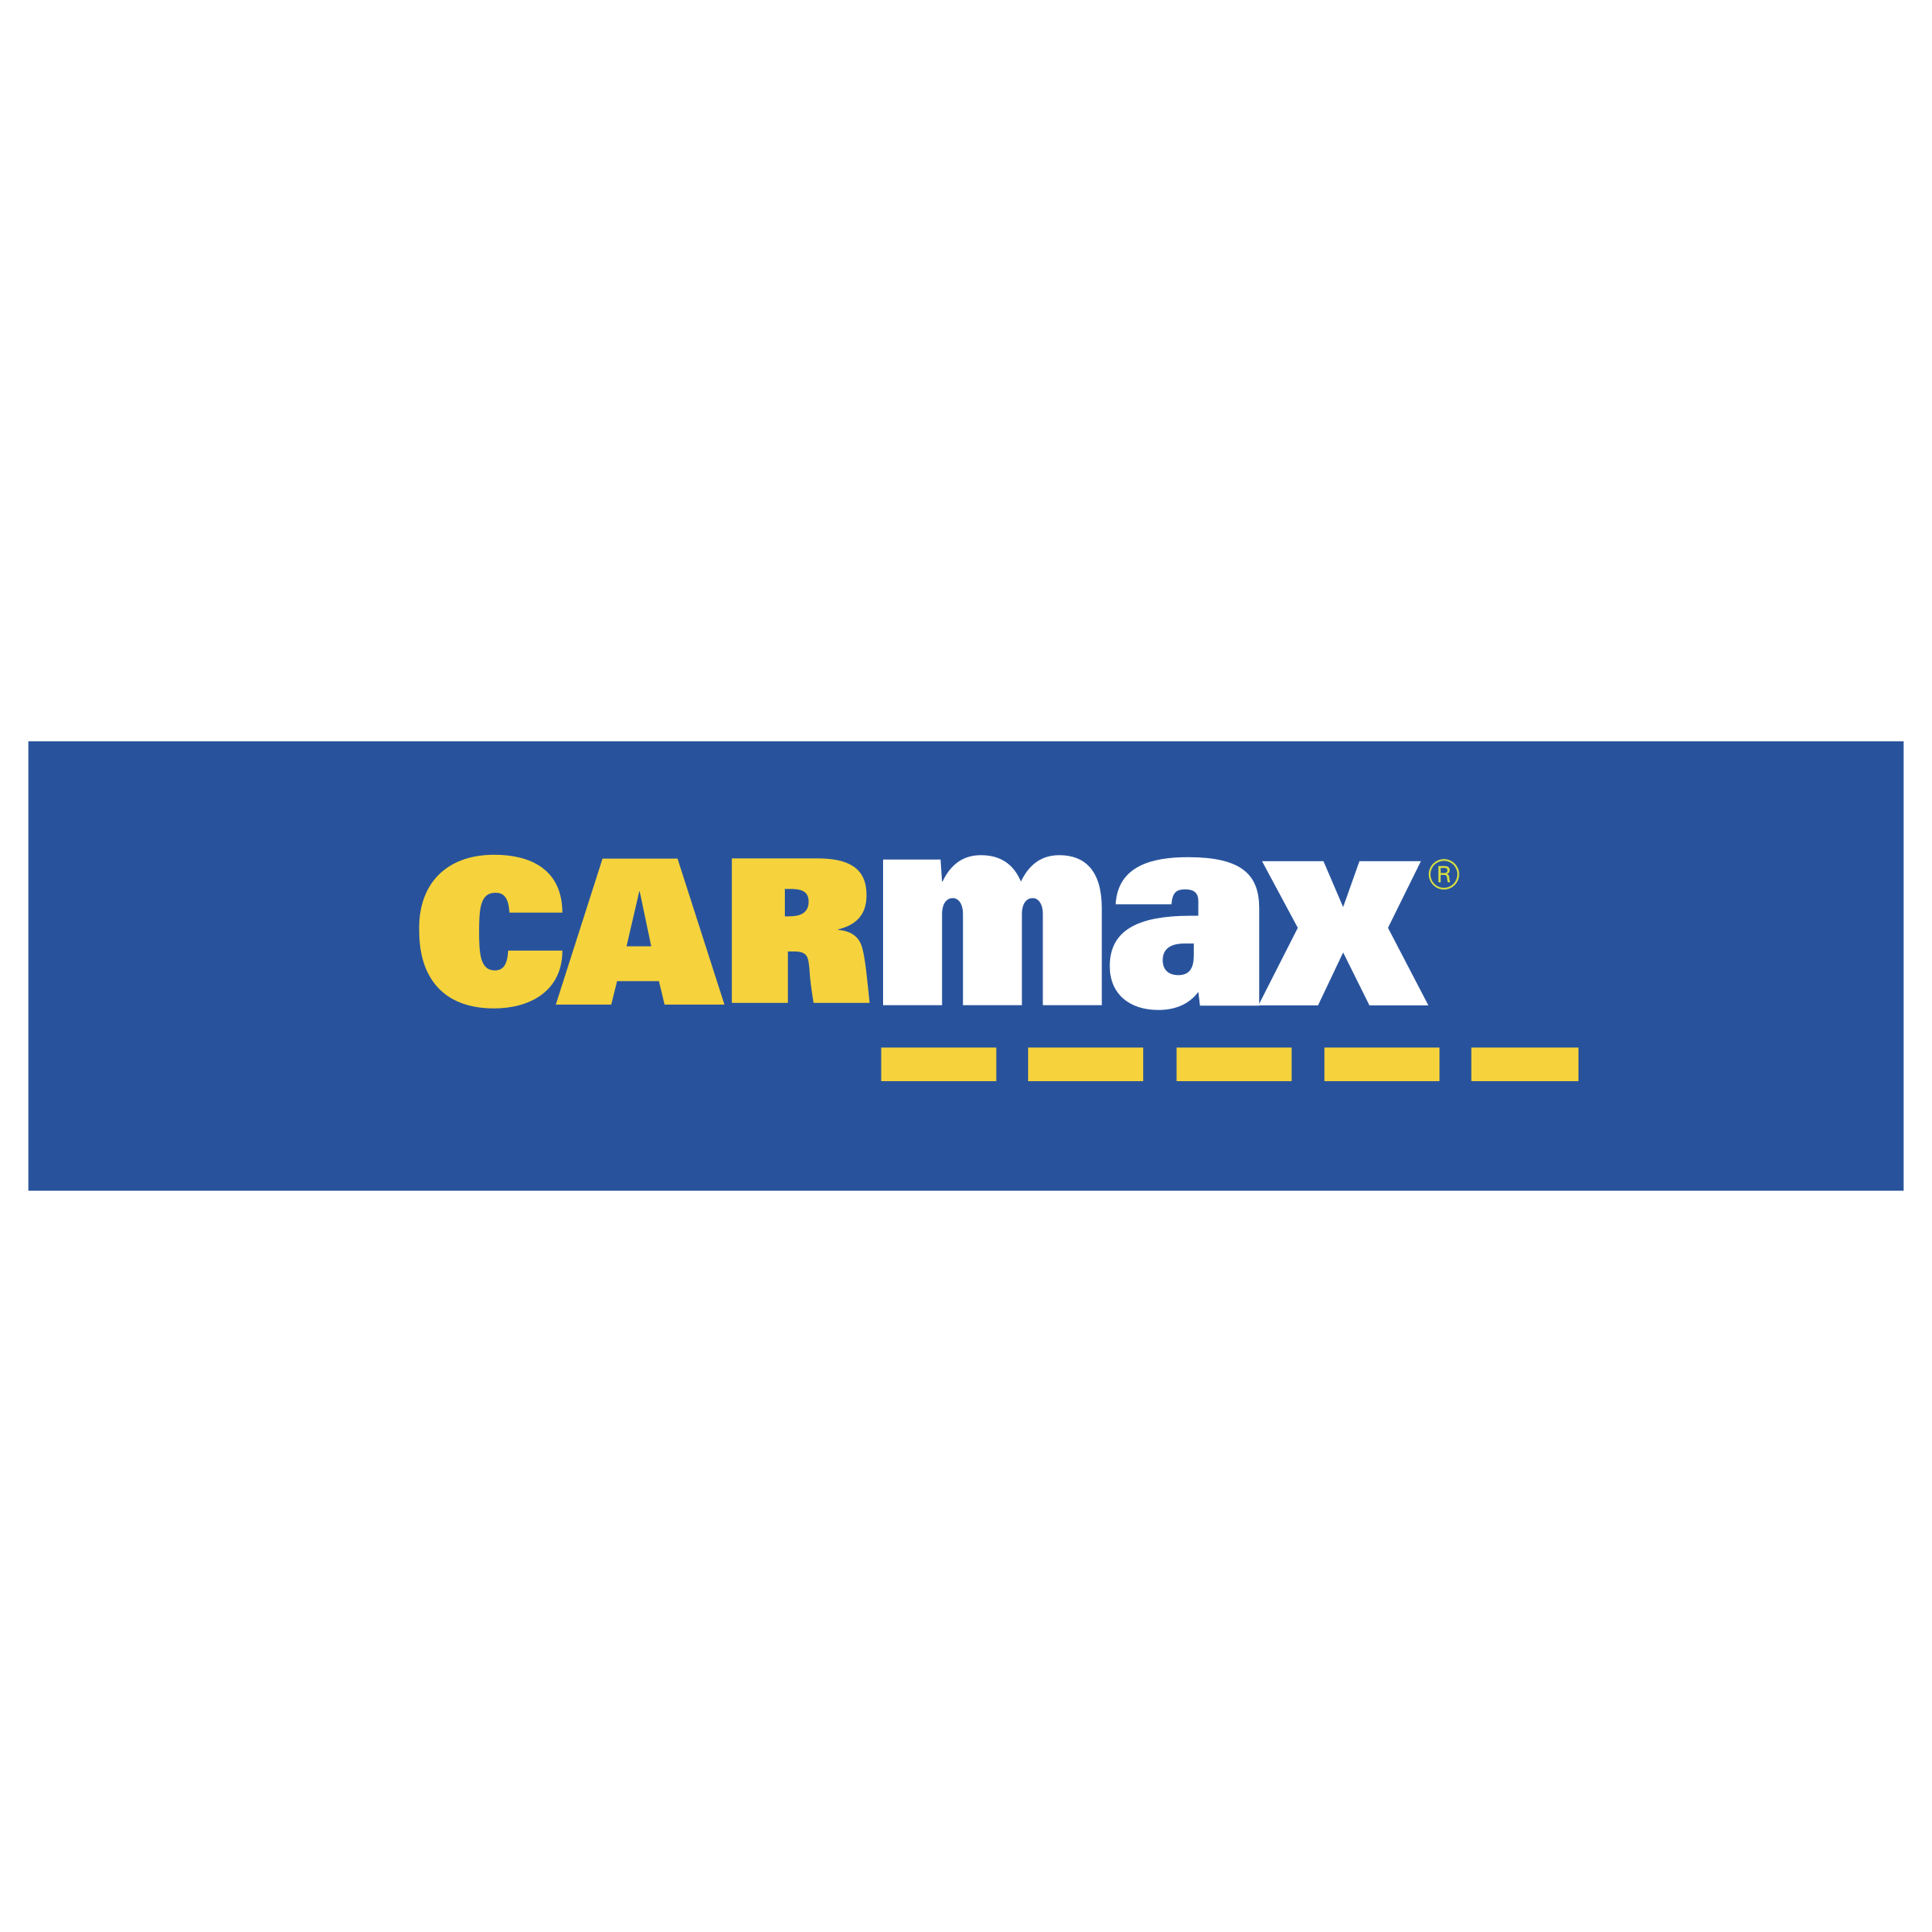 CarMax Logo - CarMax Logo PNG Transparent & SVG Vector - Freebie Supply